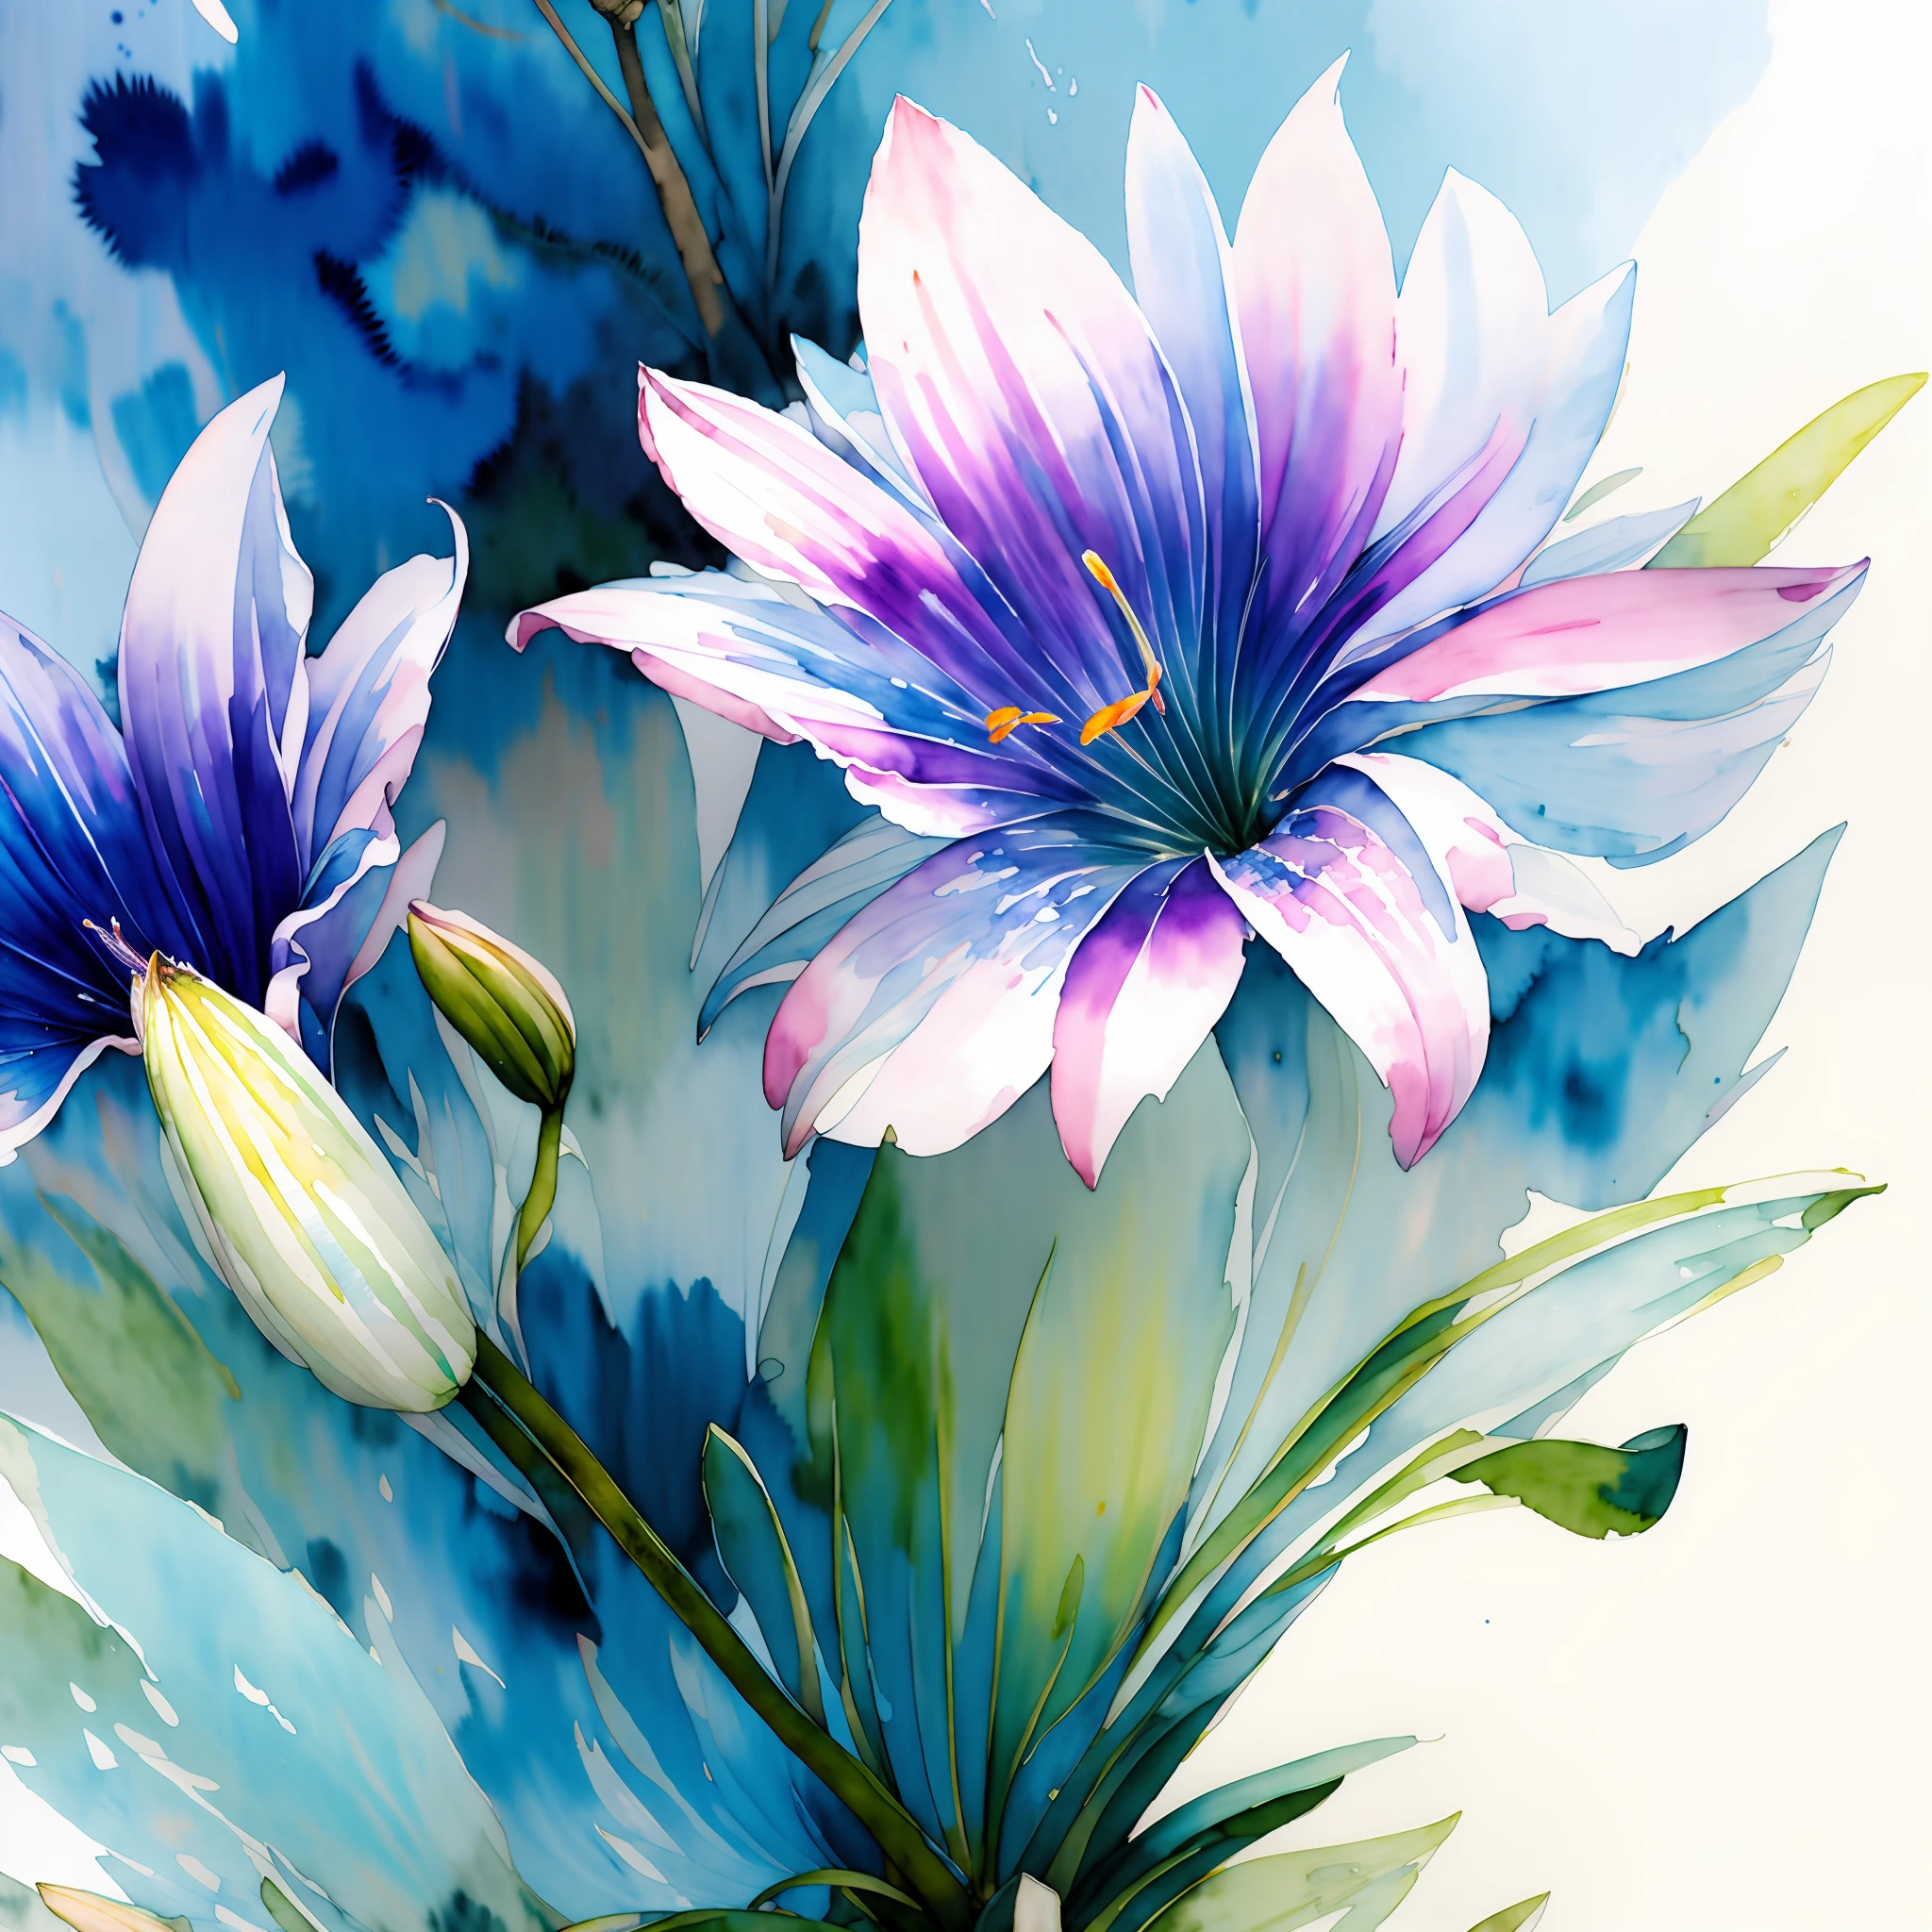 wtrcolor スタイル, デジタルアート (青いユリ), 公式アート, 風に吹かれて, 傑作, 美しい, ((水彩)), ペイントの飛沫, 複雑なディテール. 素晴らしいディテール, [ピンピング: 0.5], アートステーションのトレンド, レイチェル・ウォーカー